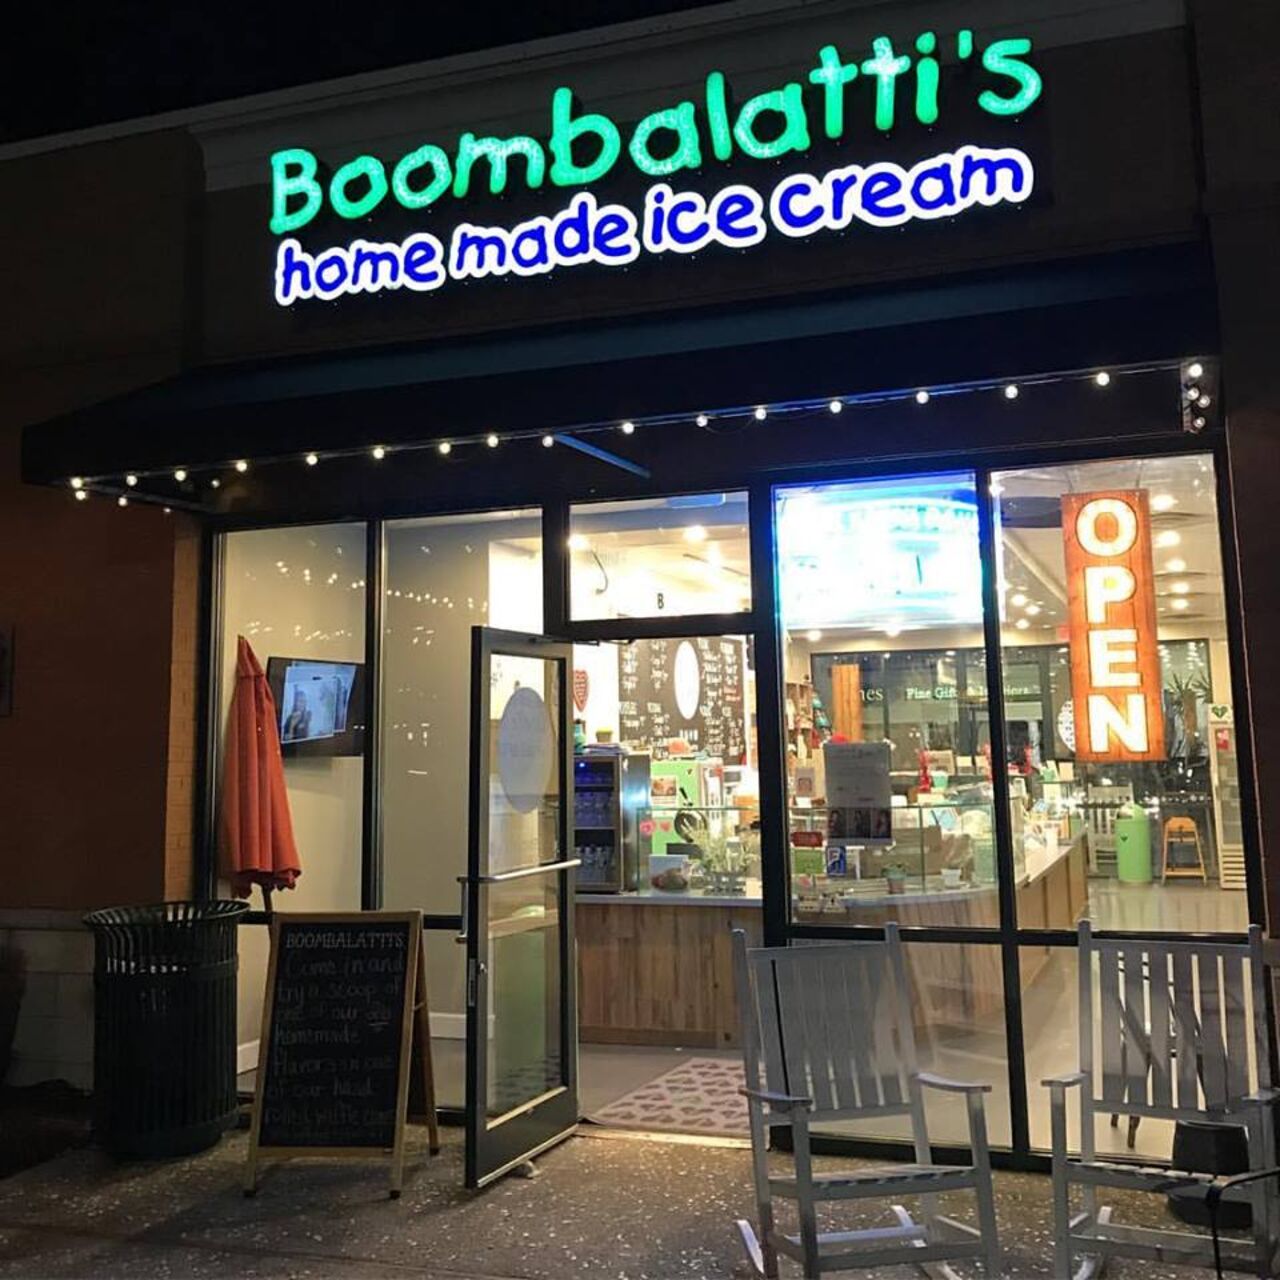 A photo of Boombalatti's